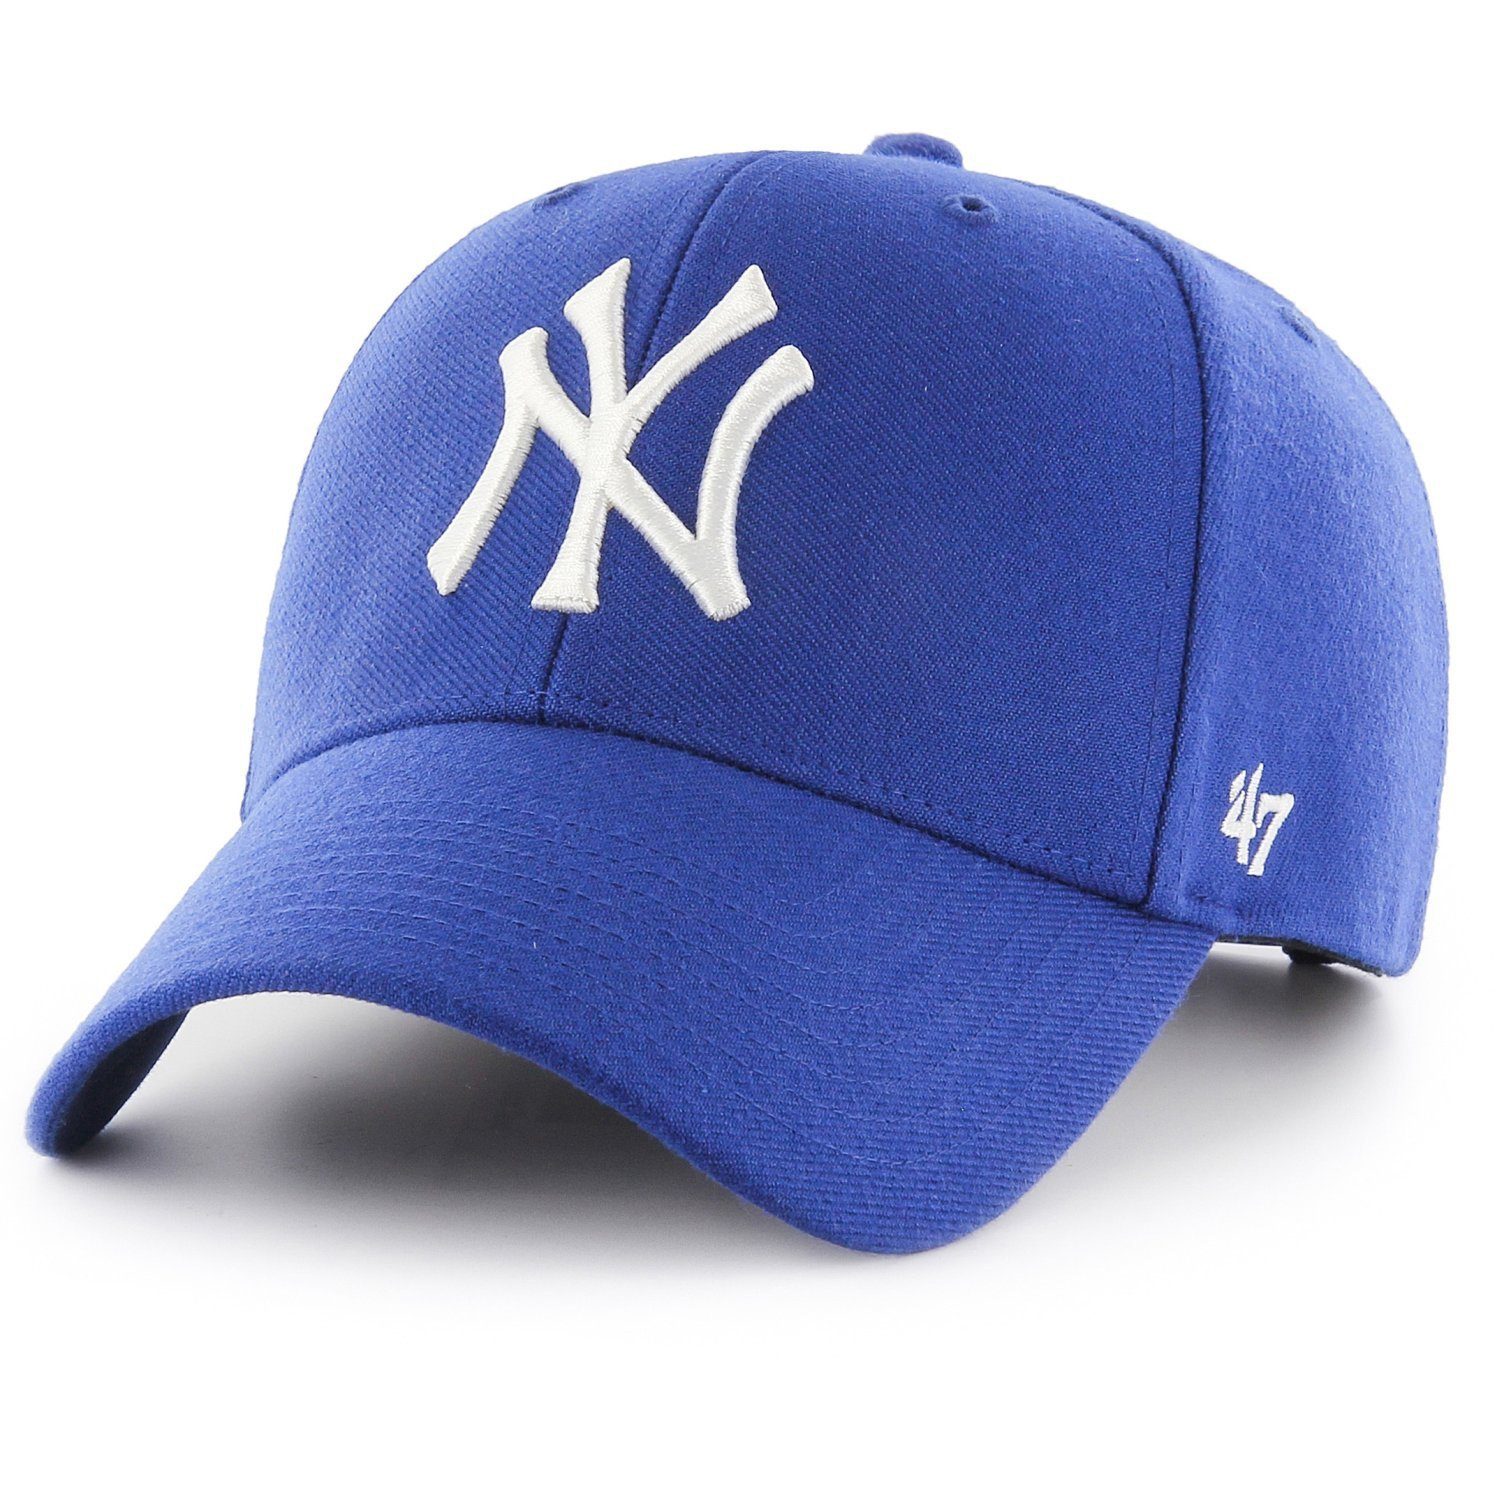 York New Cap '47 MLB Snapback Yankees Brand